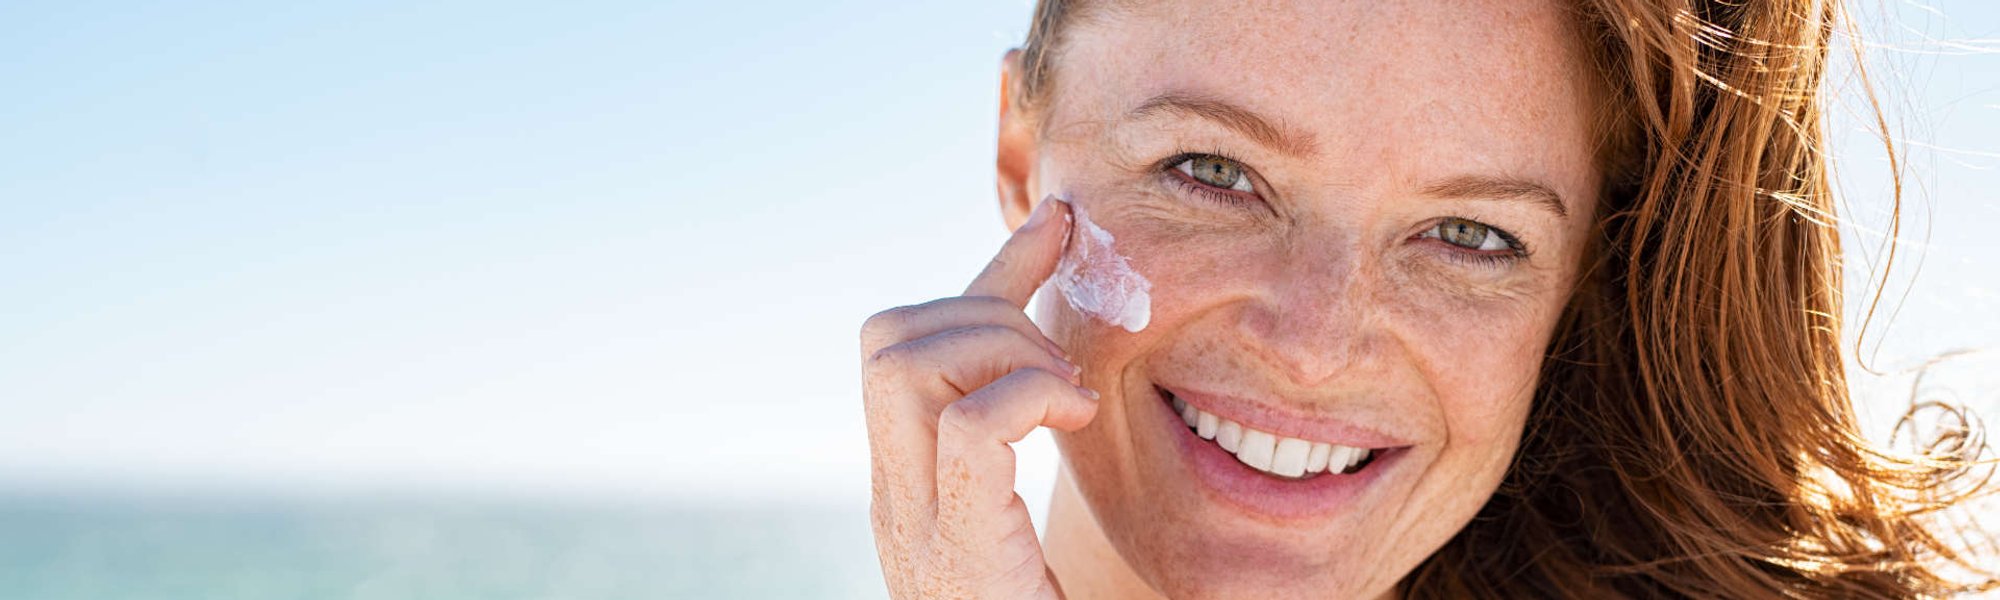 Usar filtro solar facial todos os dias deixa a pele do rosto pálida? |  L'Oréal Paris